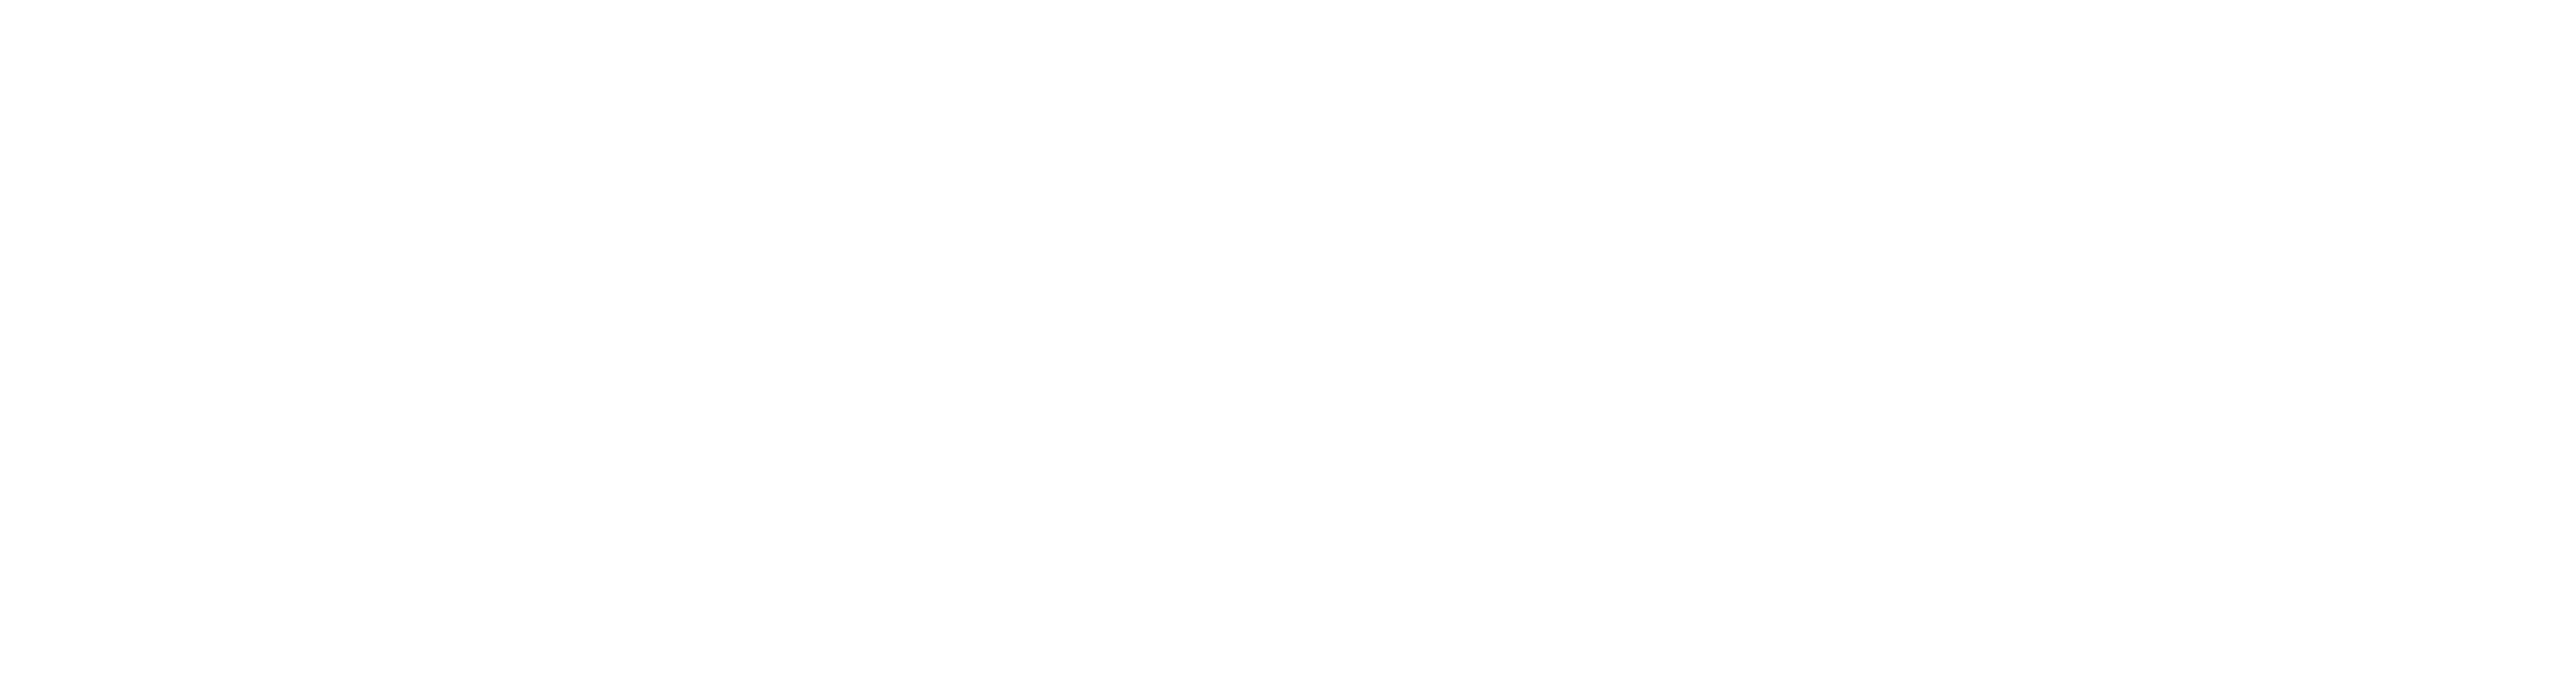 Hare Honda Pre-Order